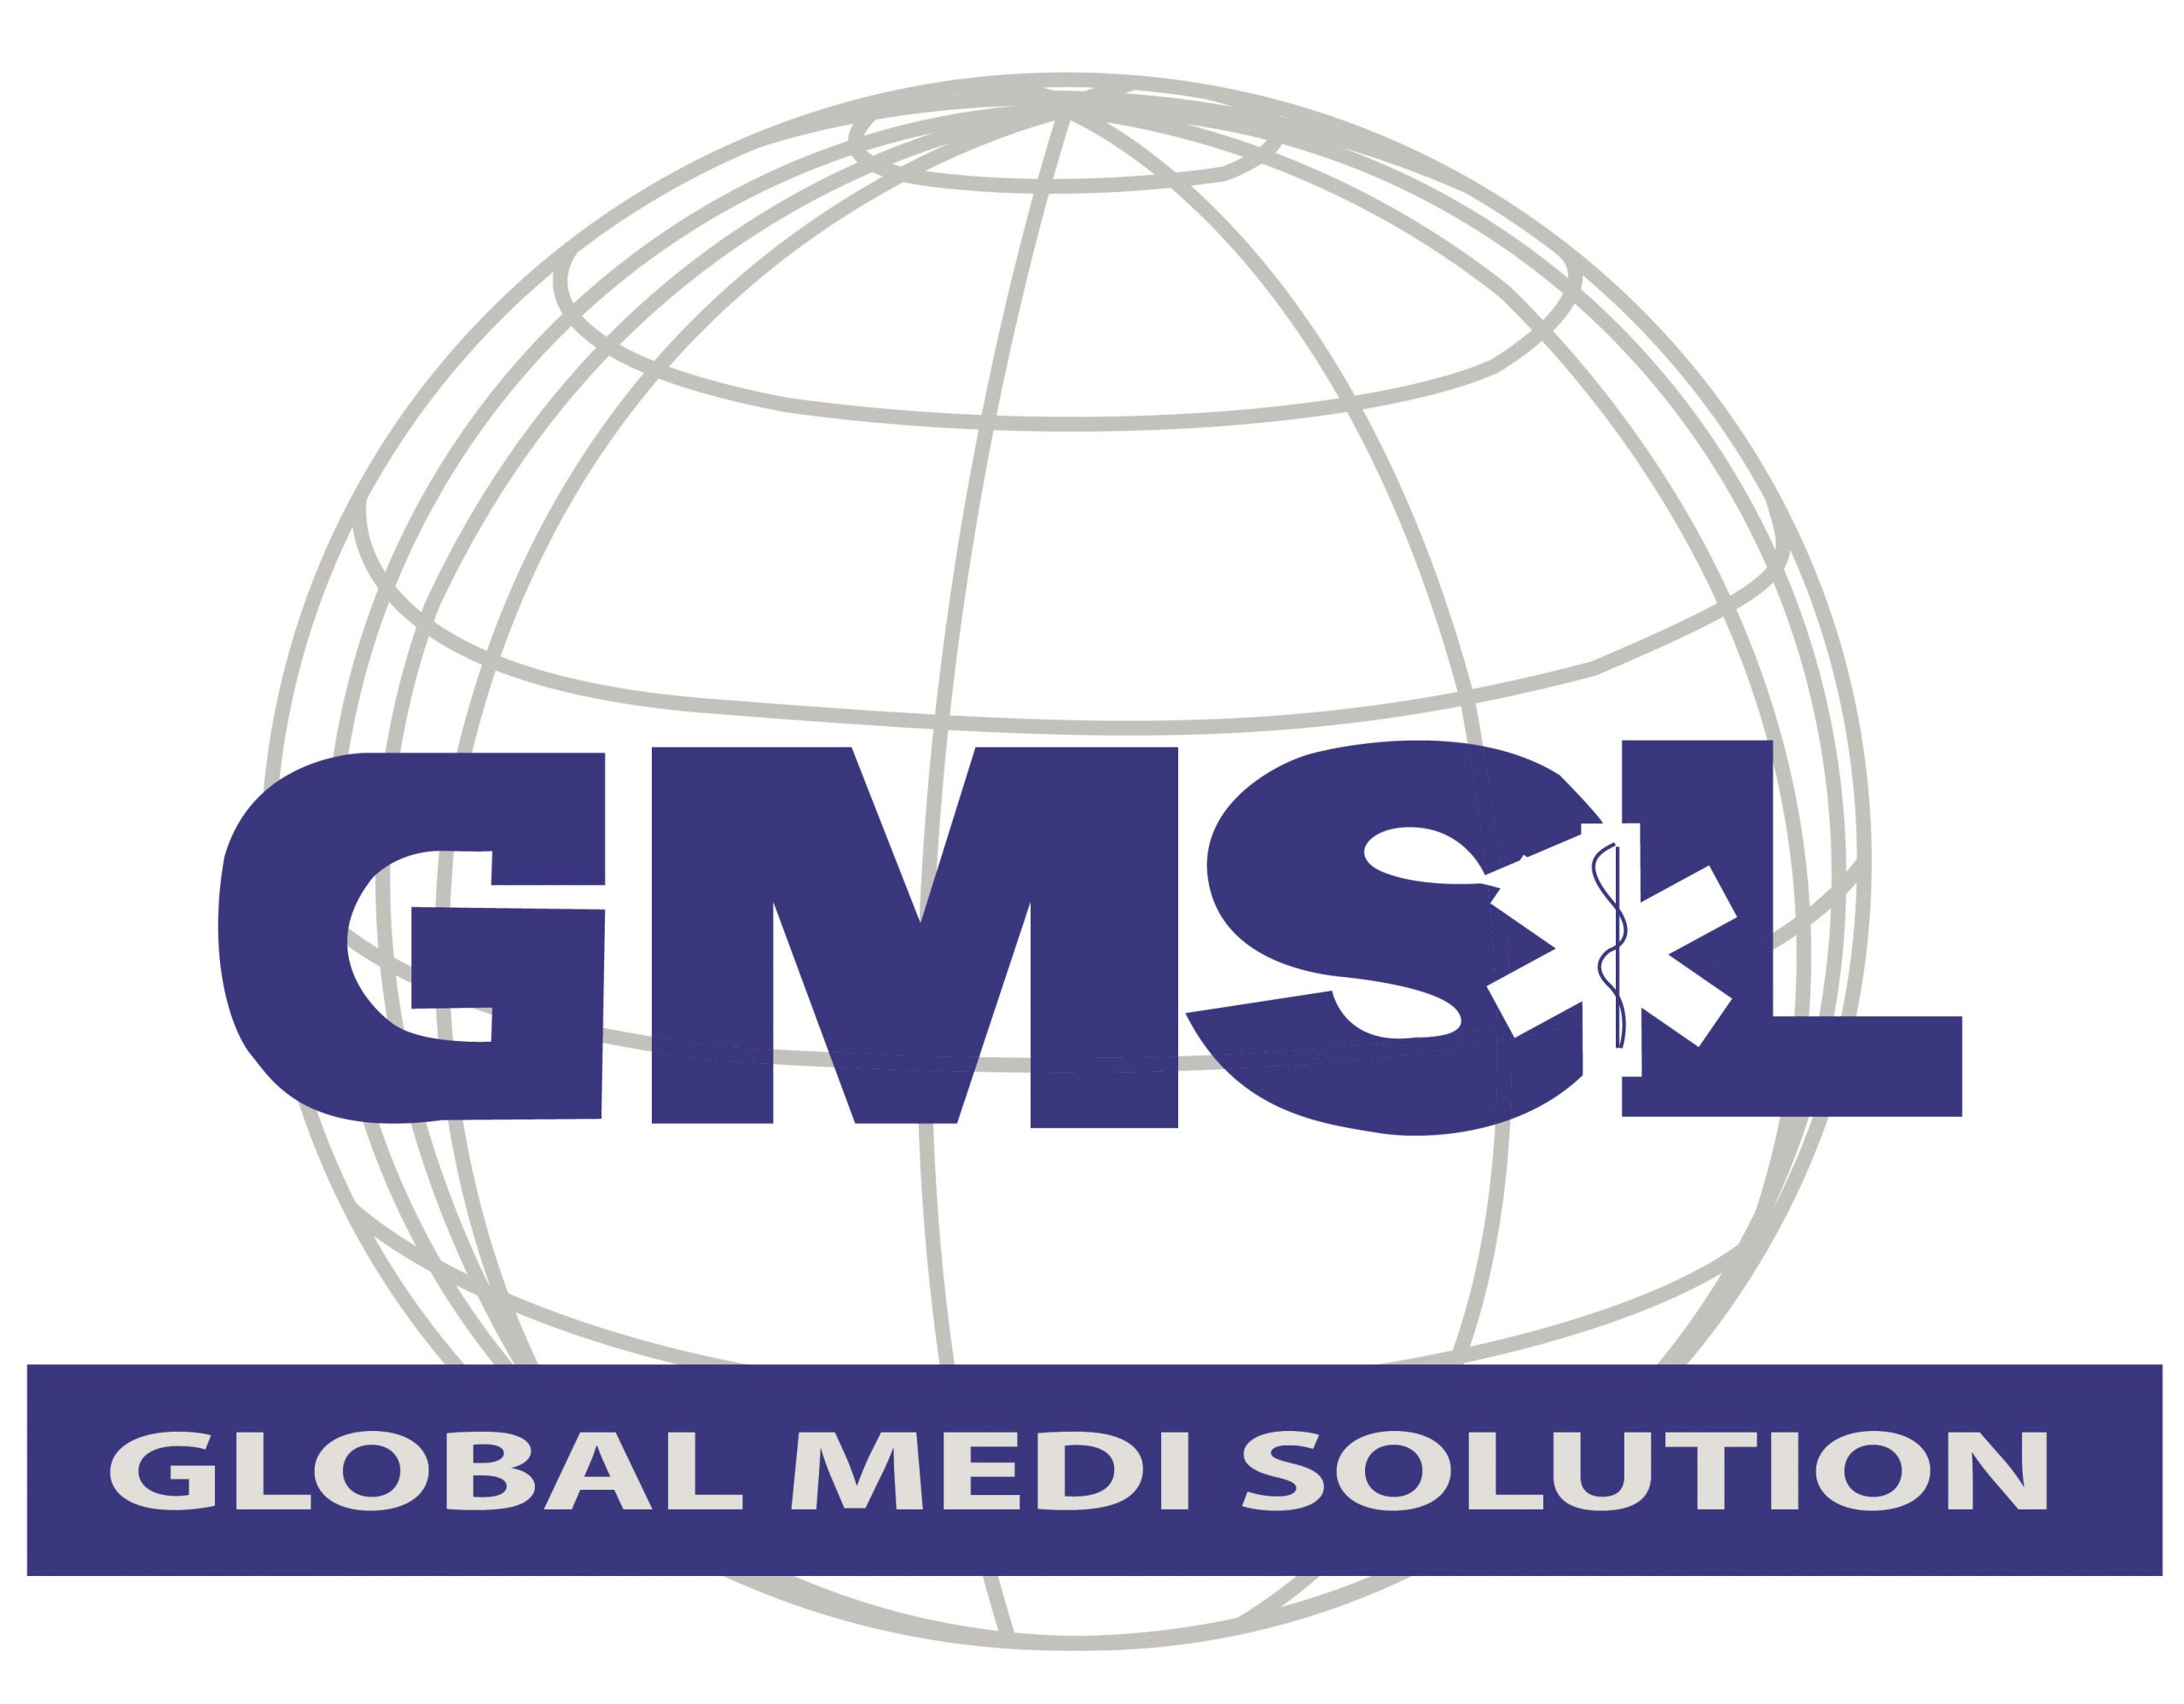 Global Medi Solutions